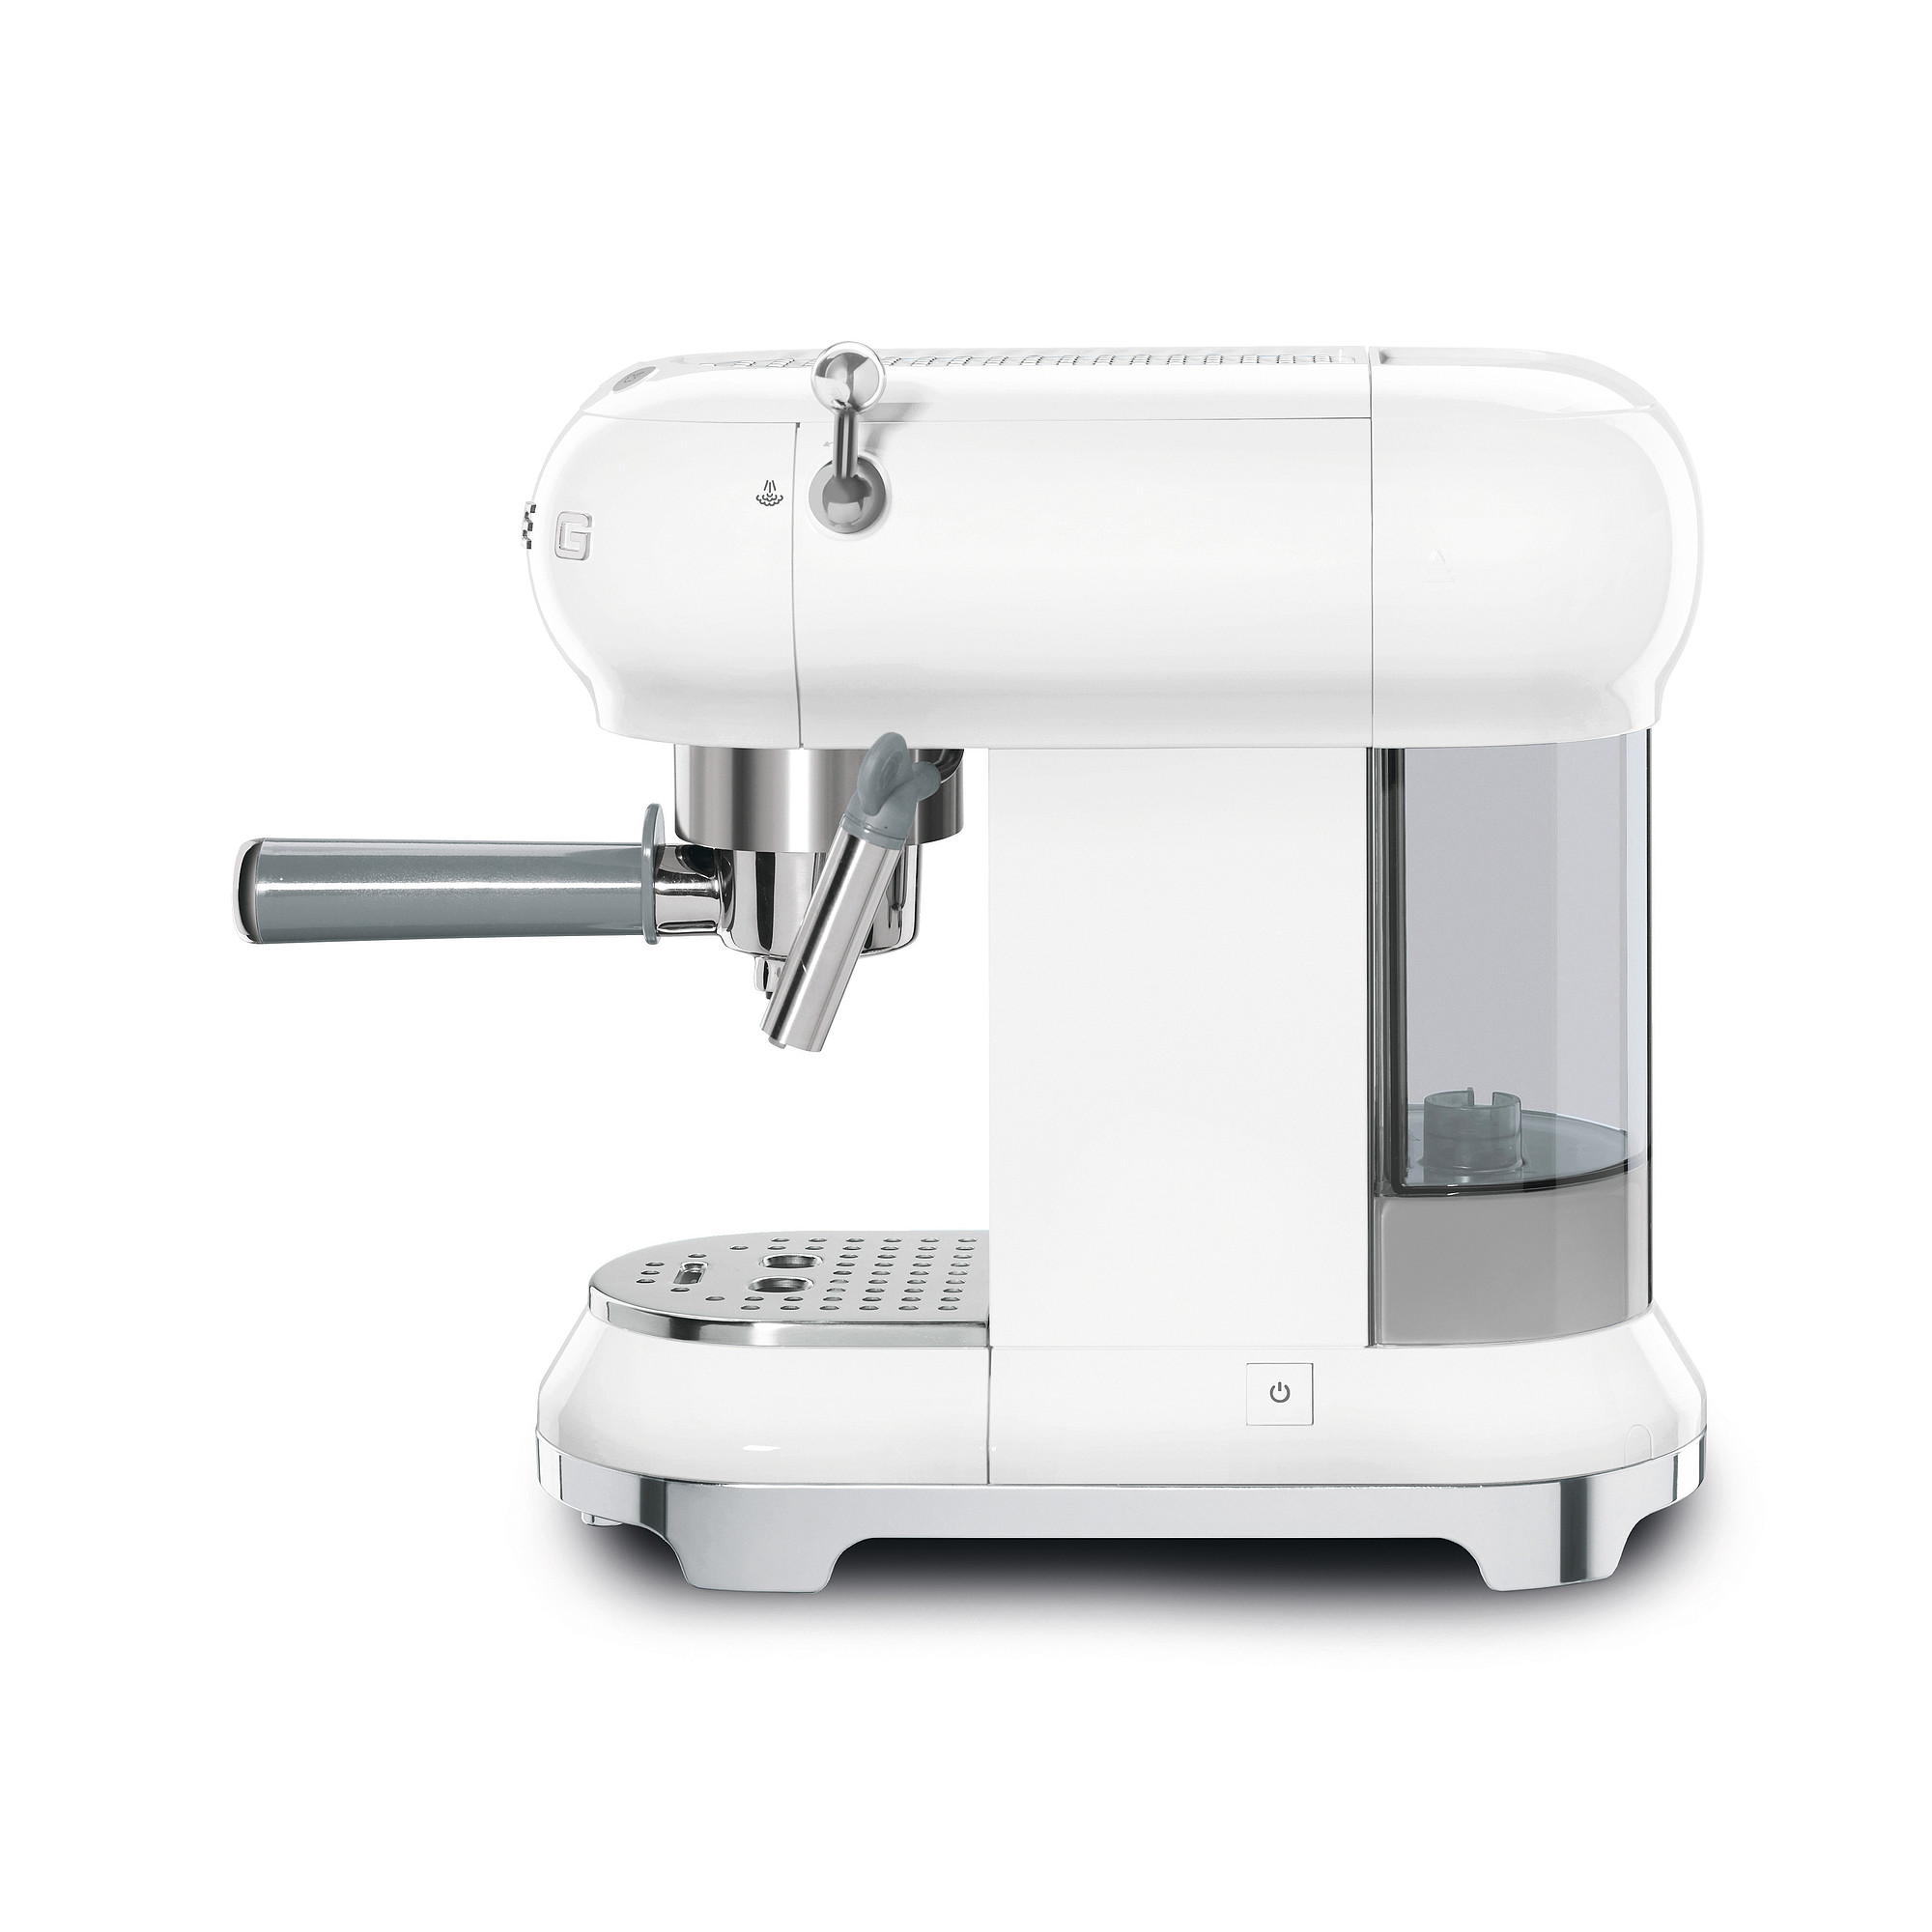 SMEG Espressomaschine Weiß